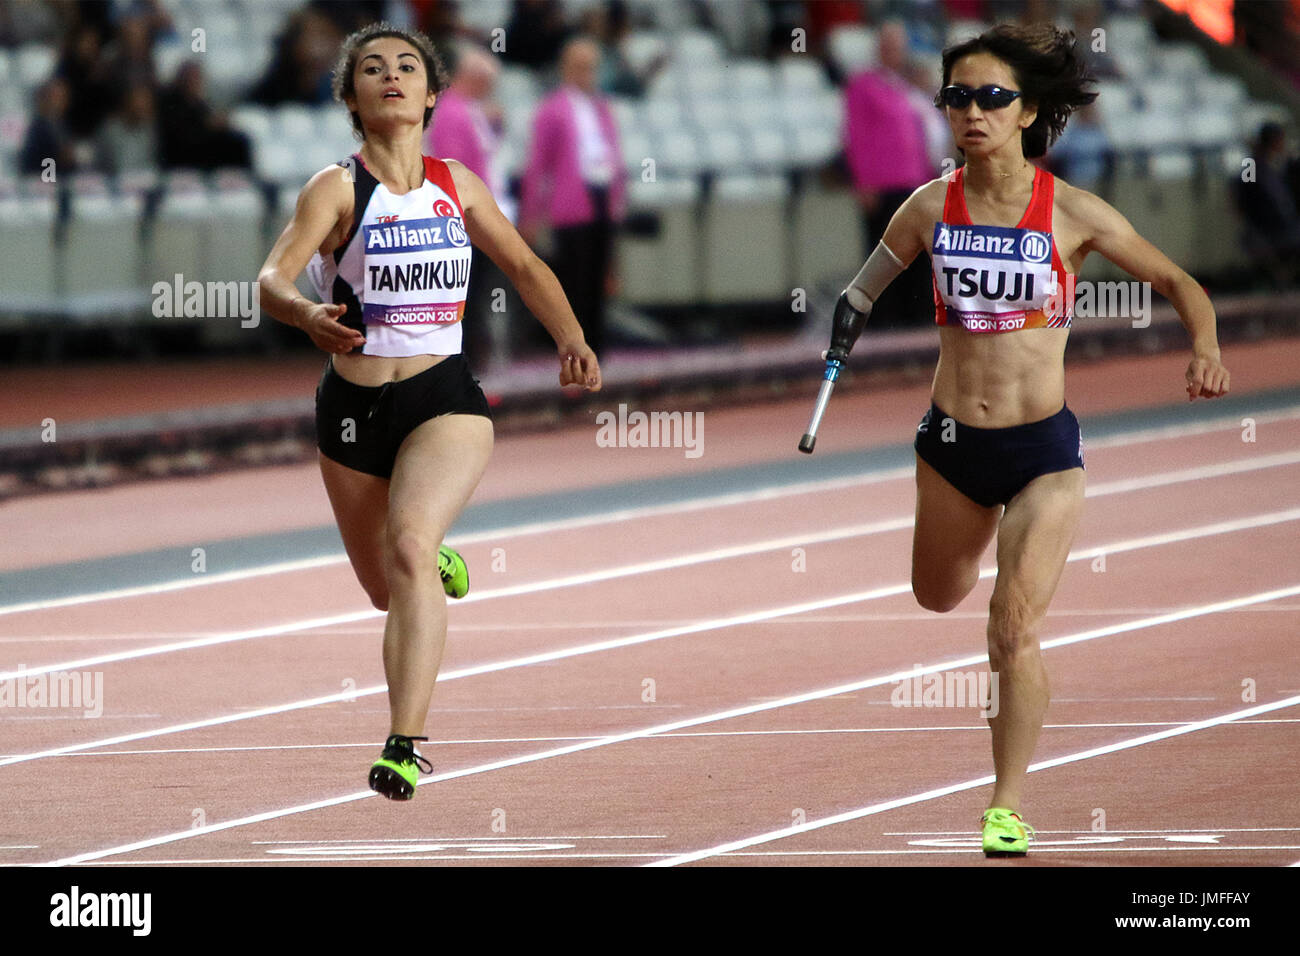 Dilba TANRIKULU of Turkey & Sae TSUJI of Japan in the Women's 200m T47 heats at the World Para Championships in London 2017 Stock Photo